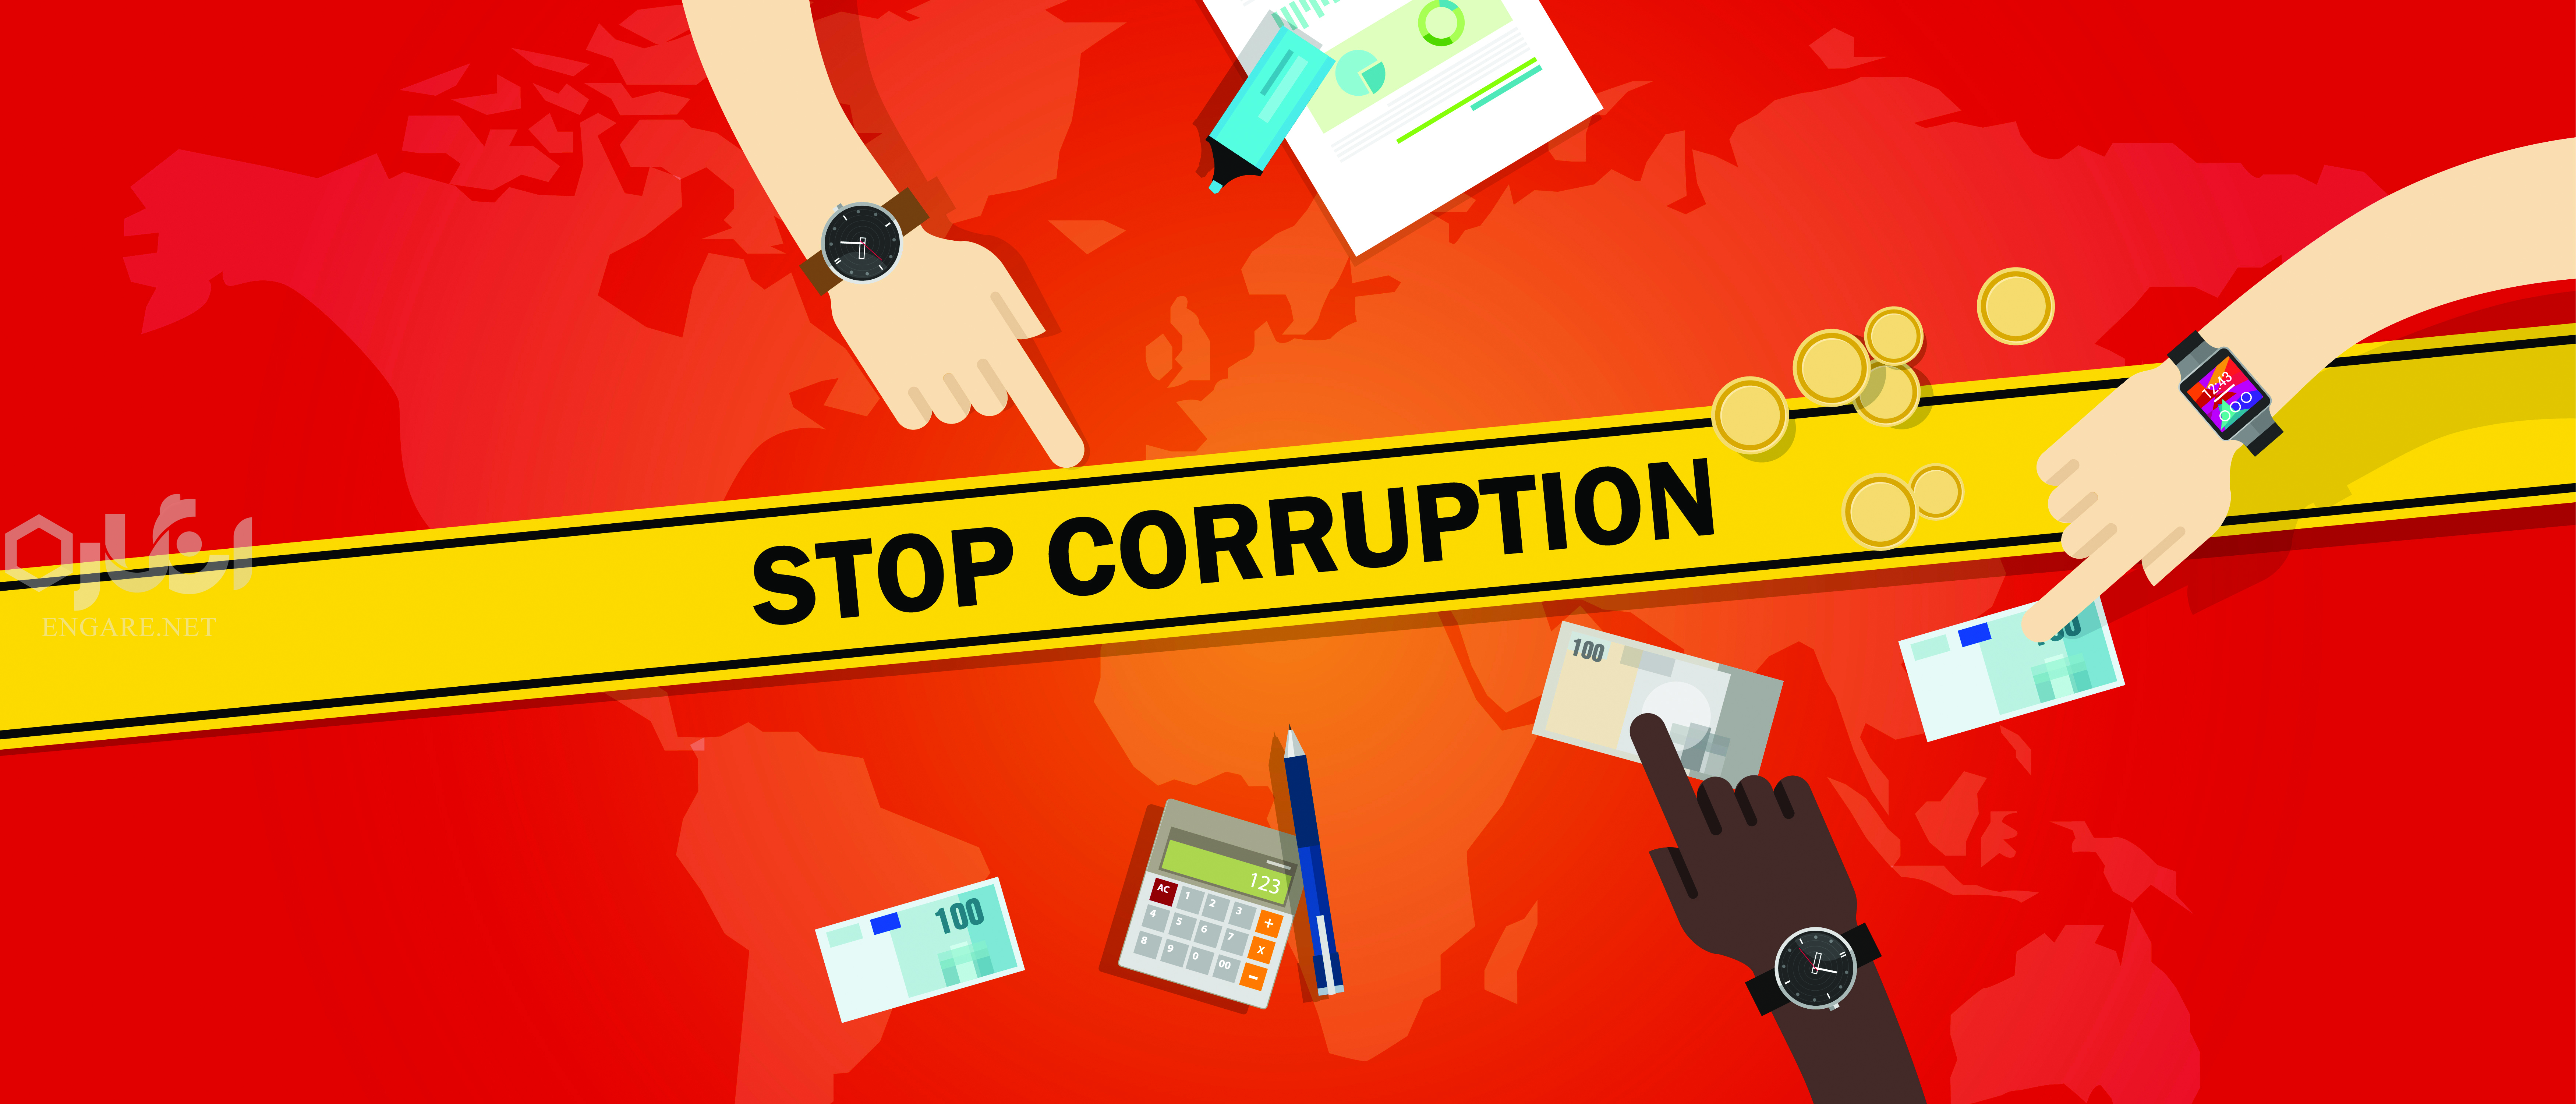 stop corruption - سه گام ضروری در مبارزه با فساد - نهاد قضايي, فساد ساختاری, فساد اداری, فساد, عباس عبدی, ضد فساد, سیاست های فسادی